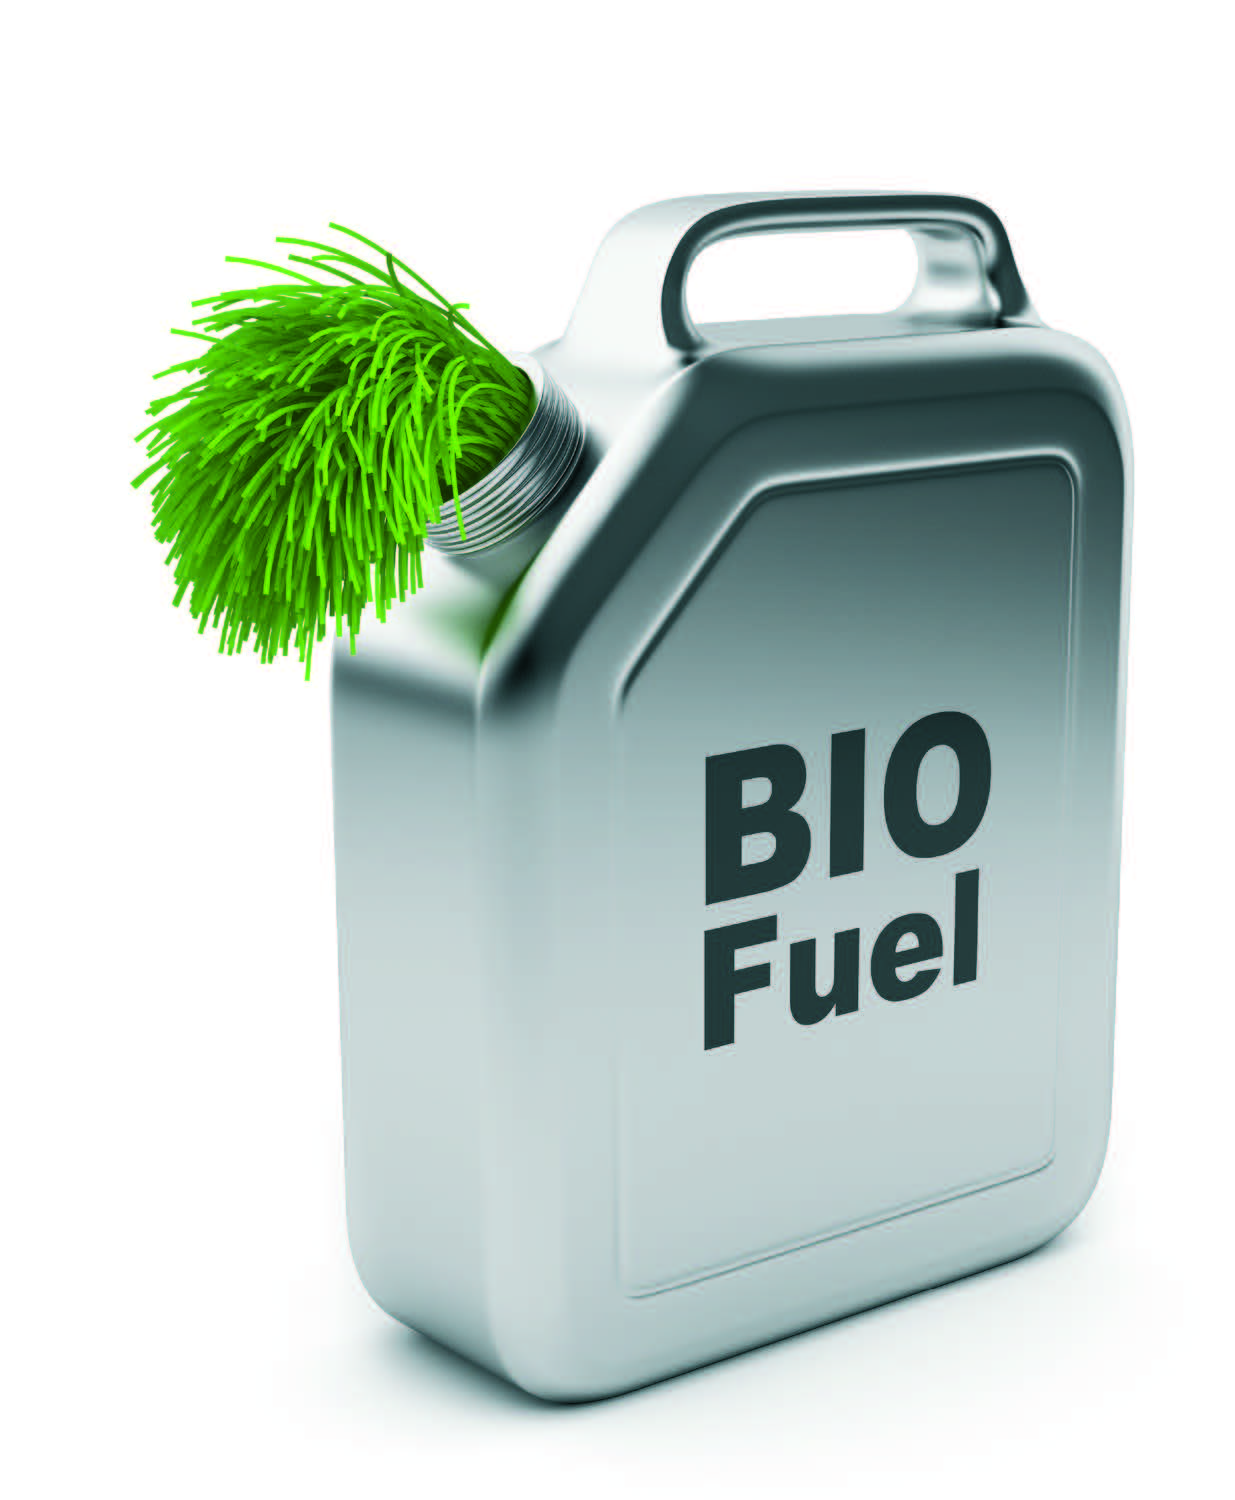 Biofuel carton illustration